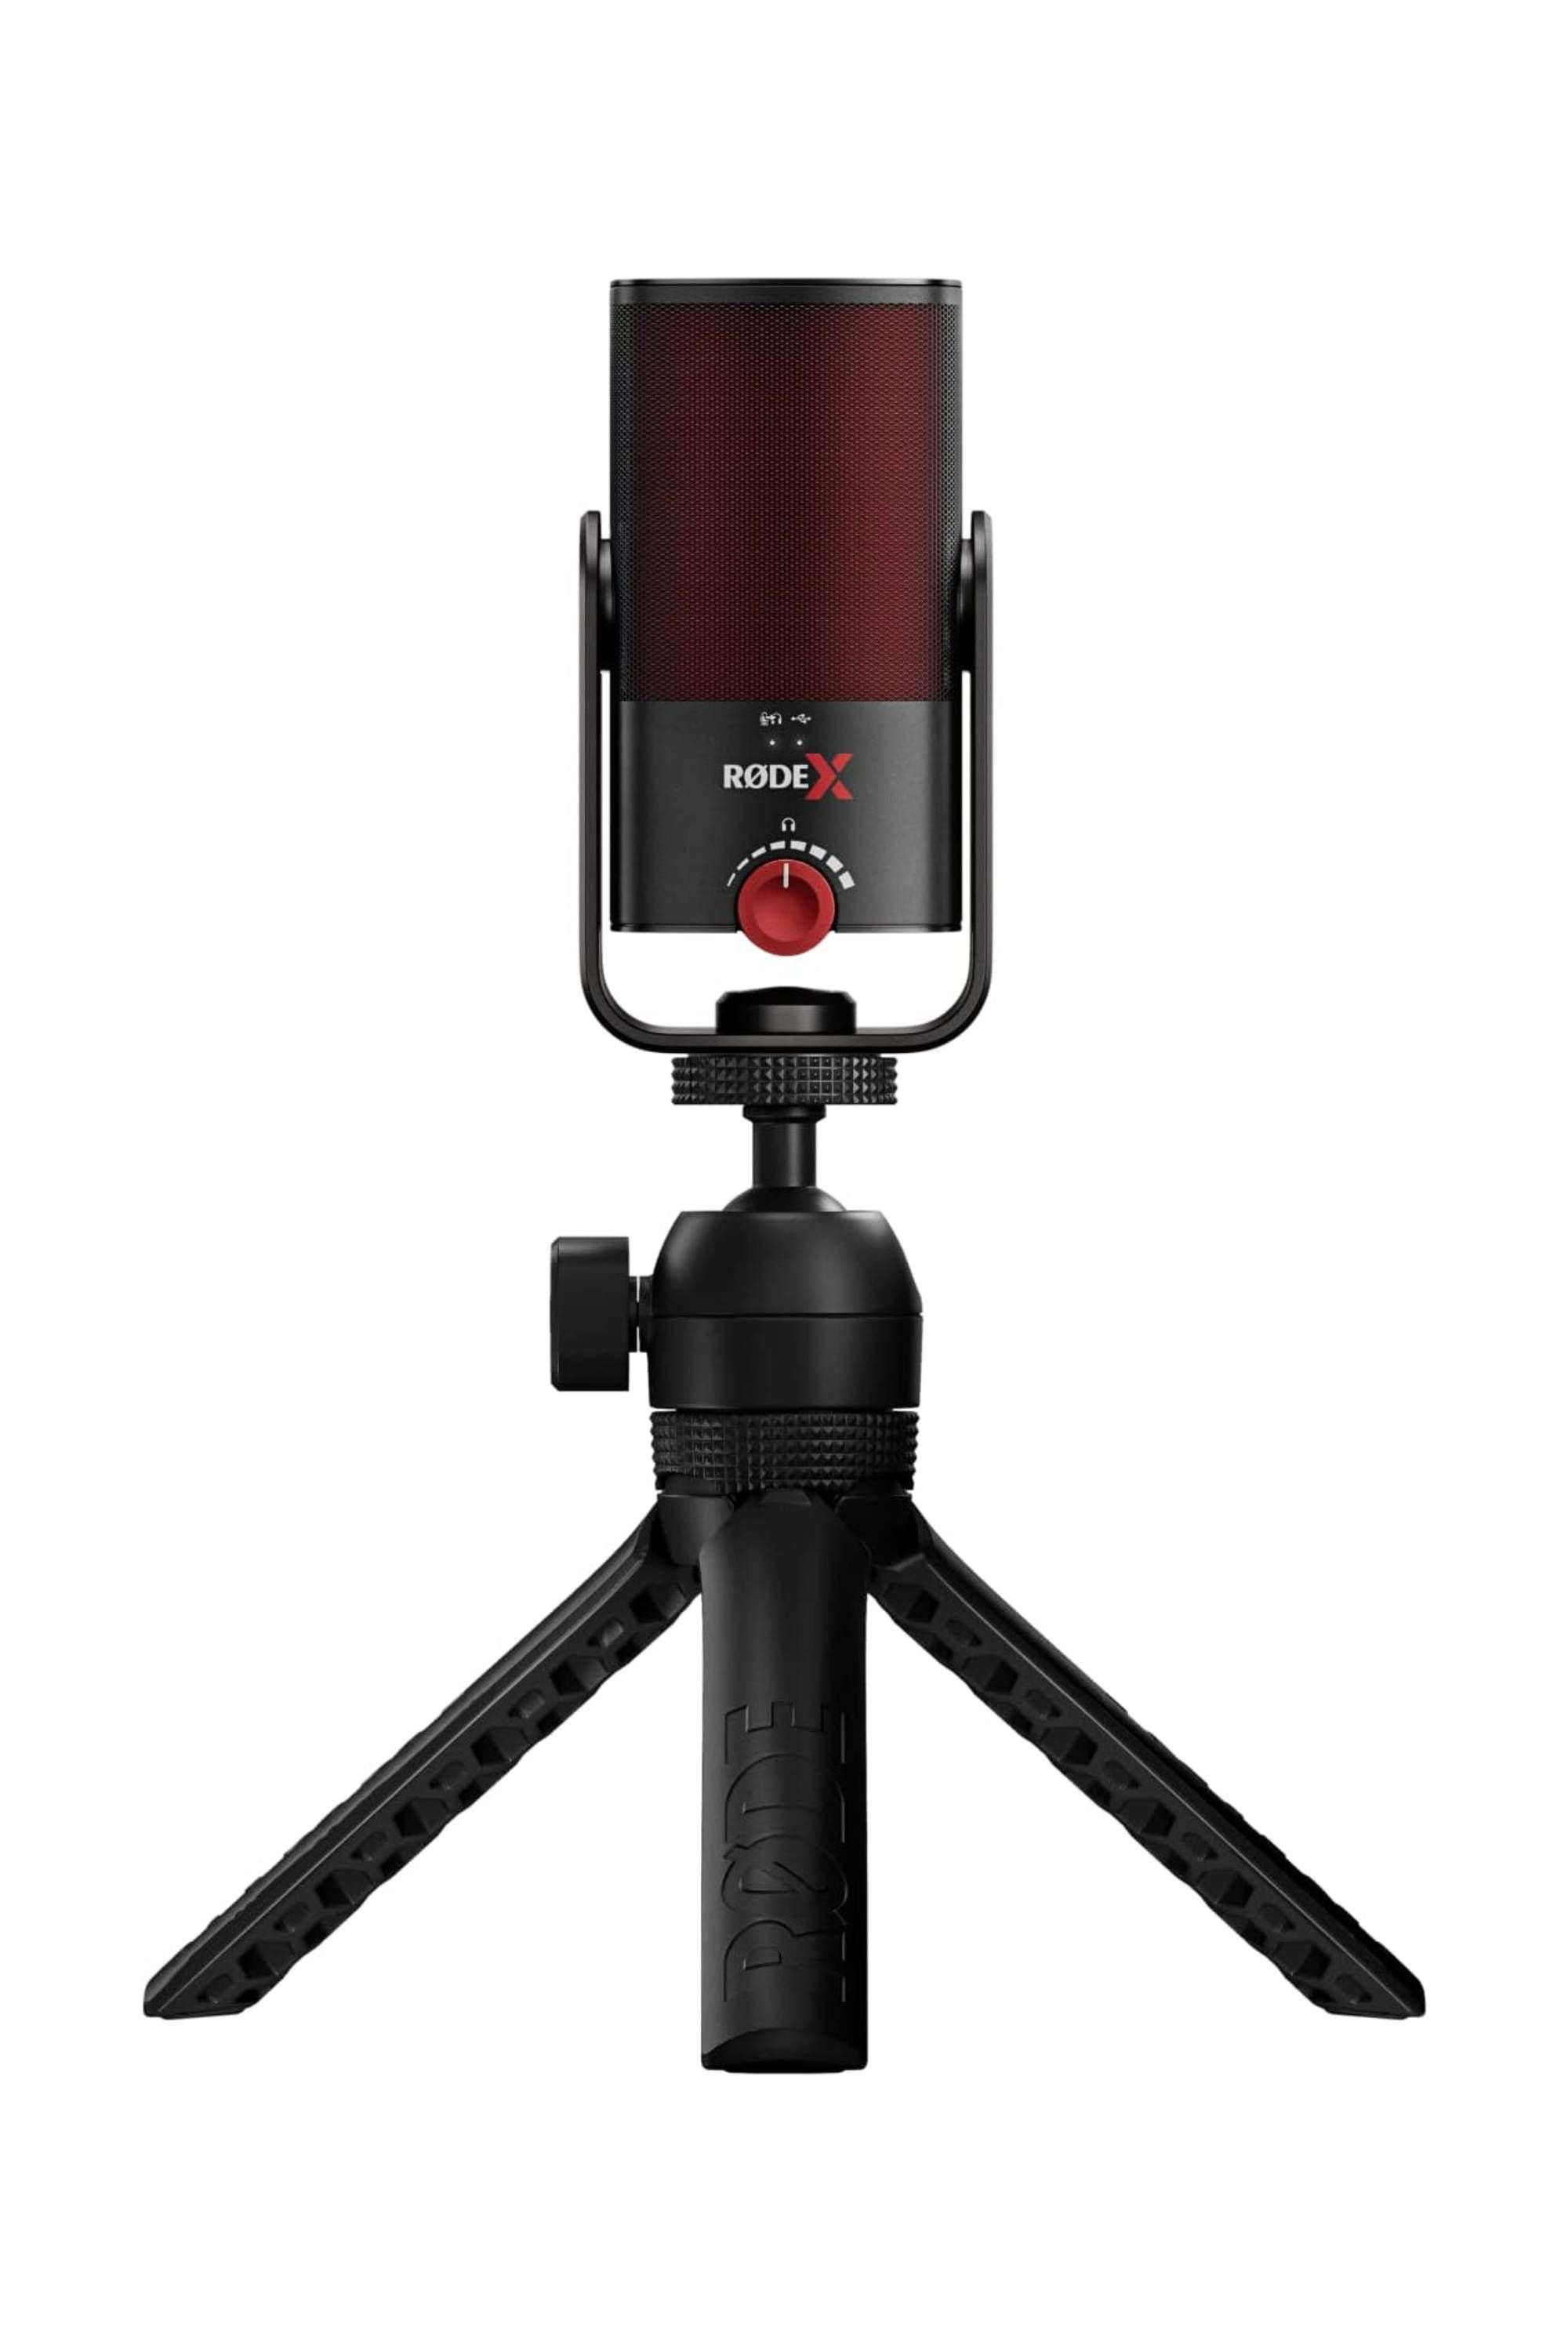 Rode X XCM-50 Condenser Microphone